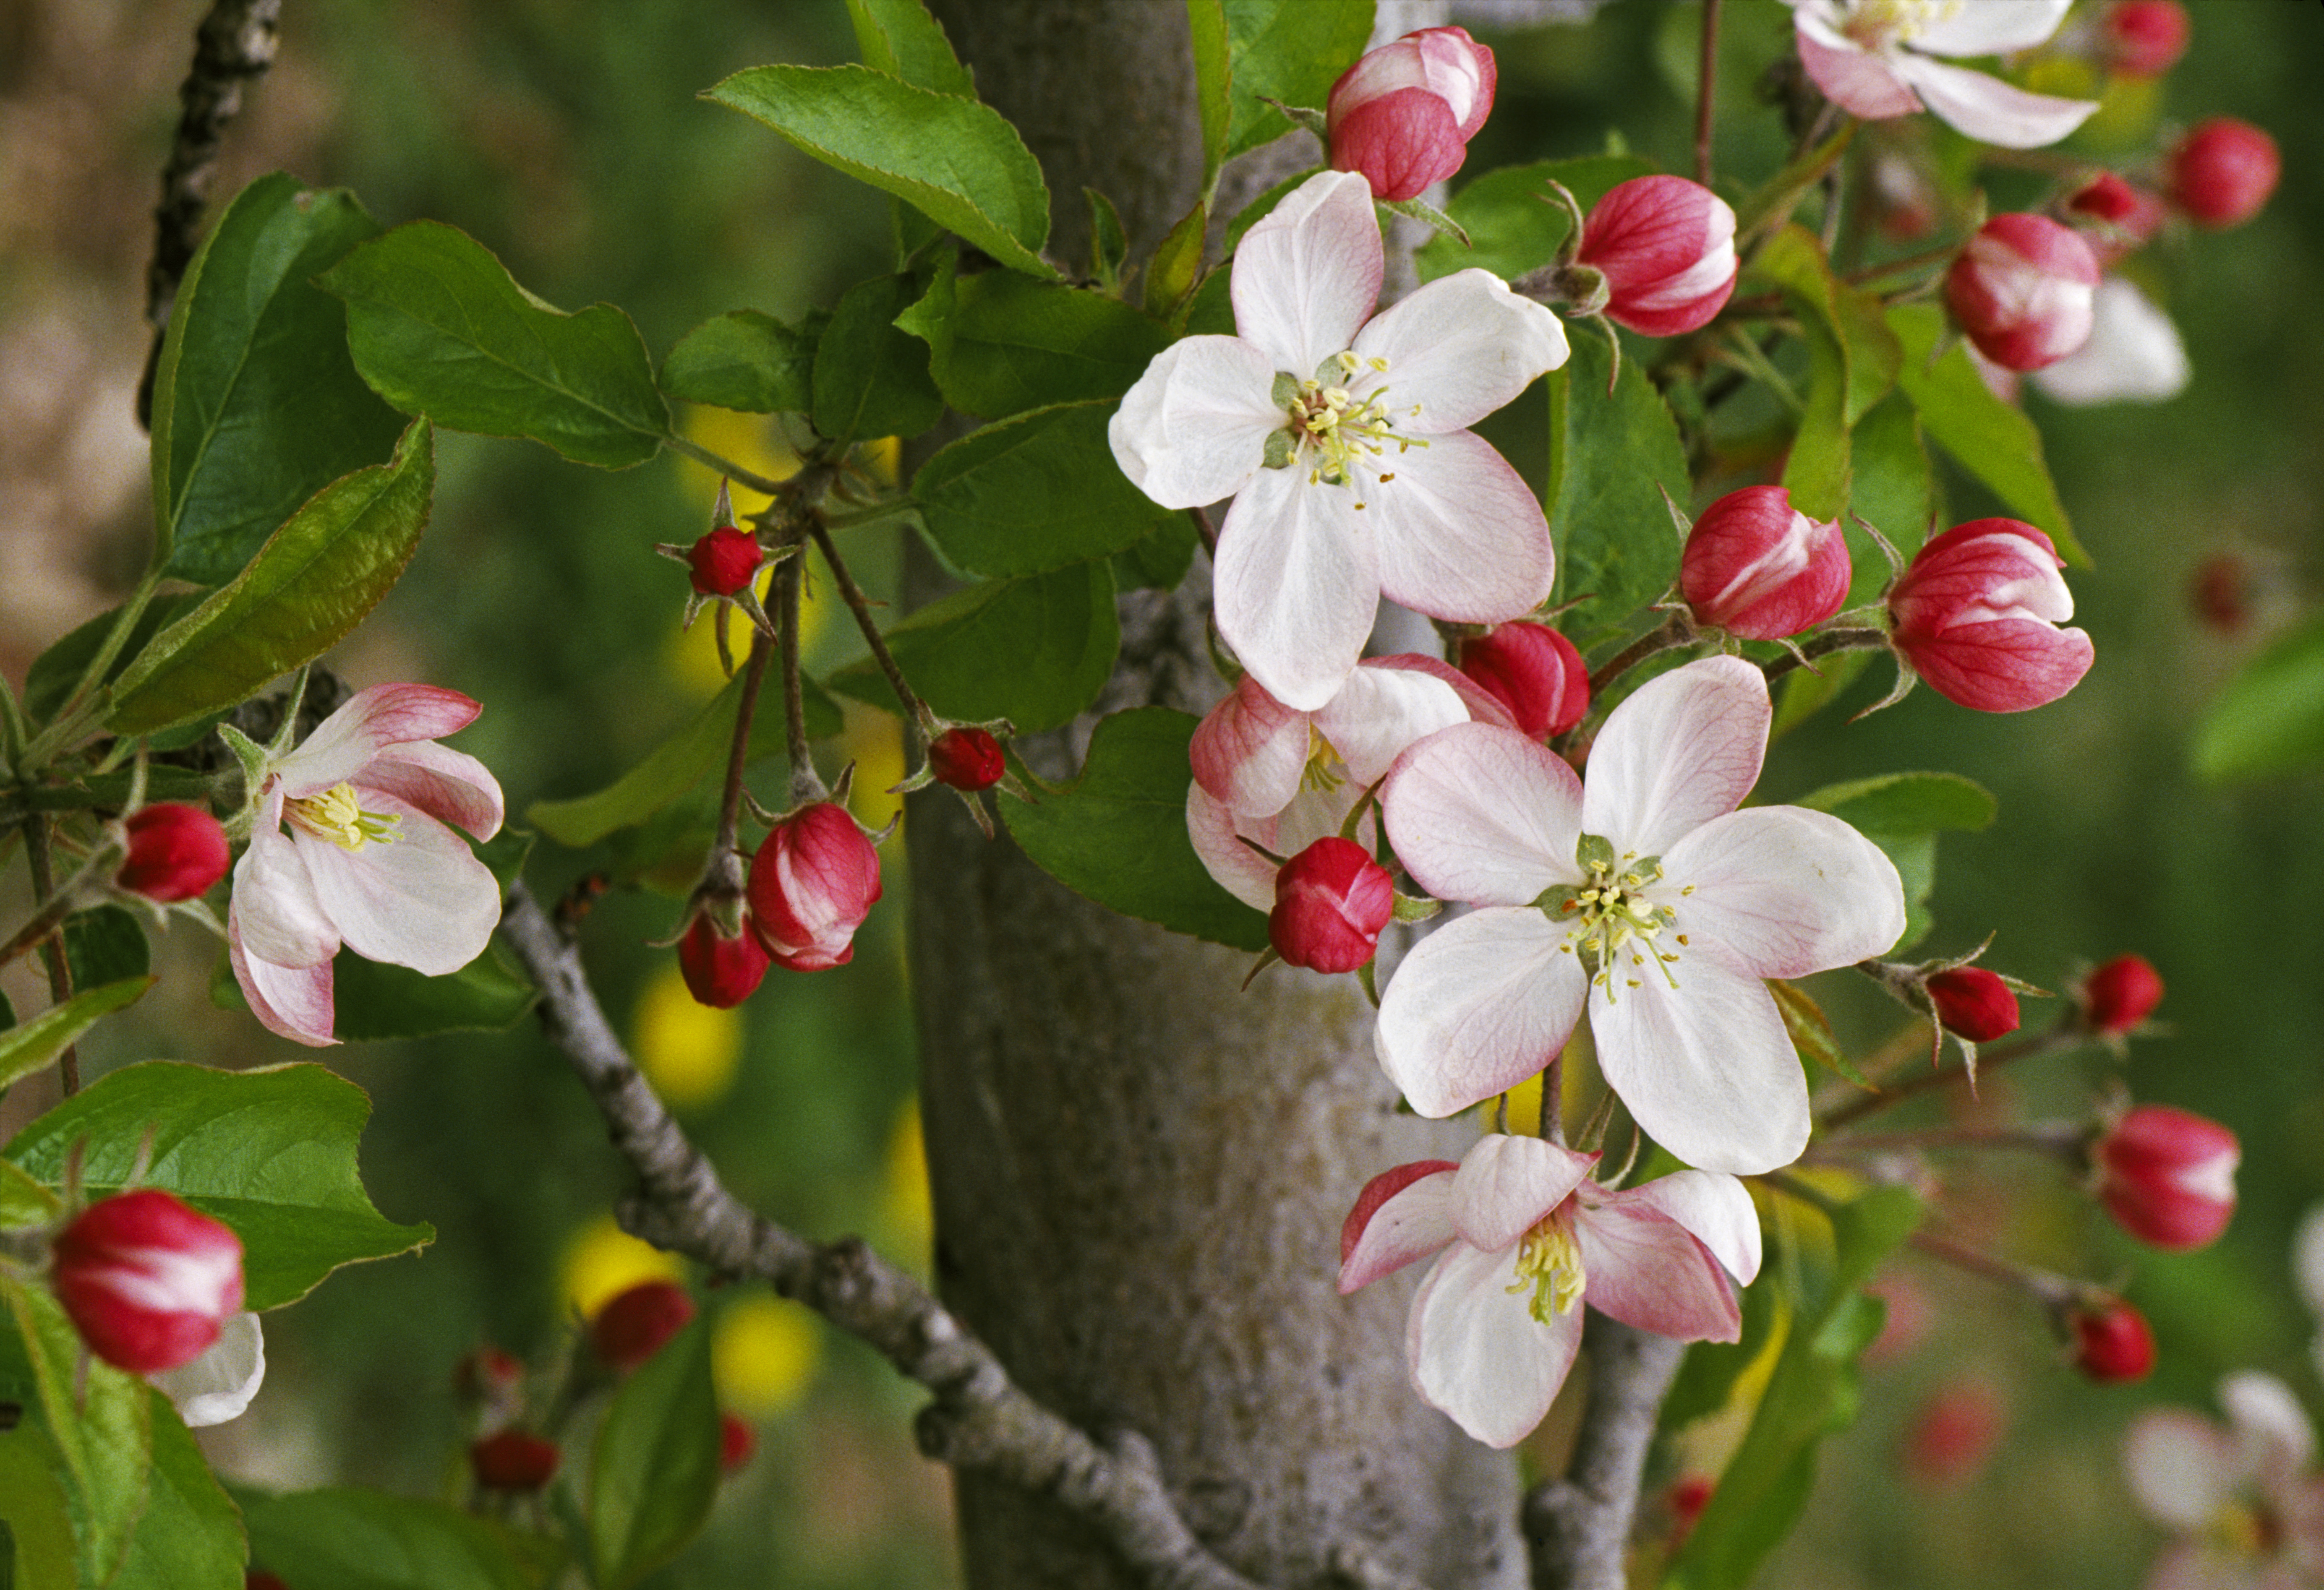 apple-blossom - Michigan Pictures - Michigan - HISTORY.com